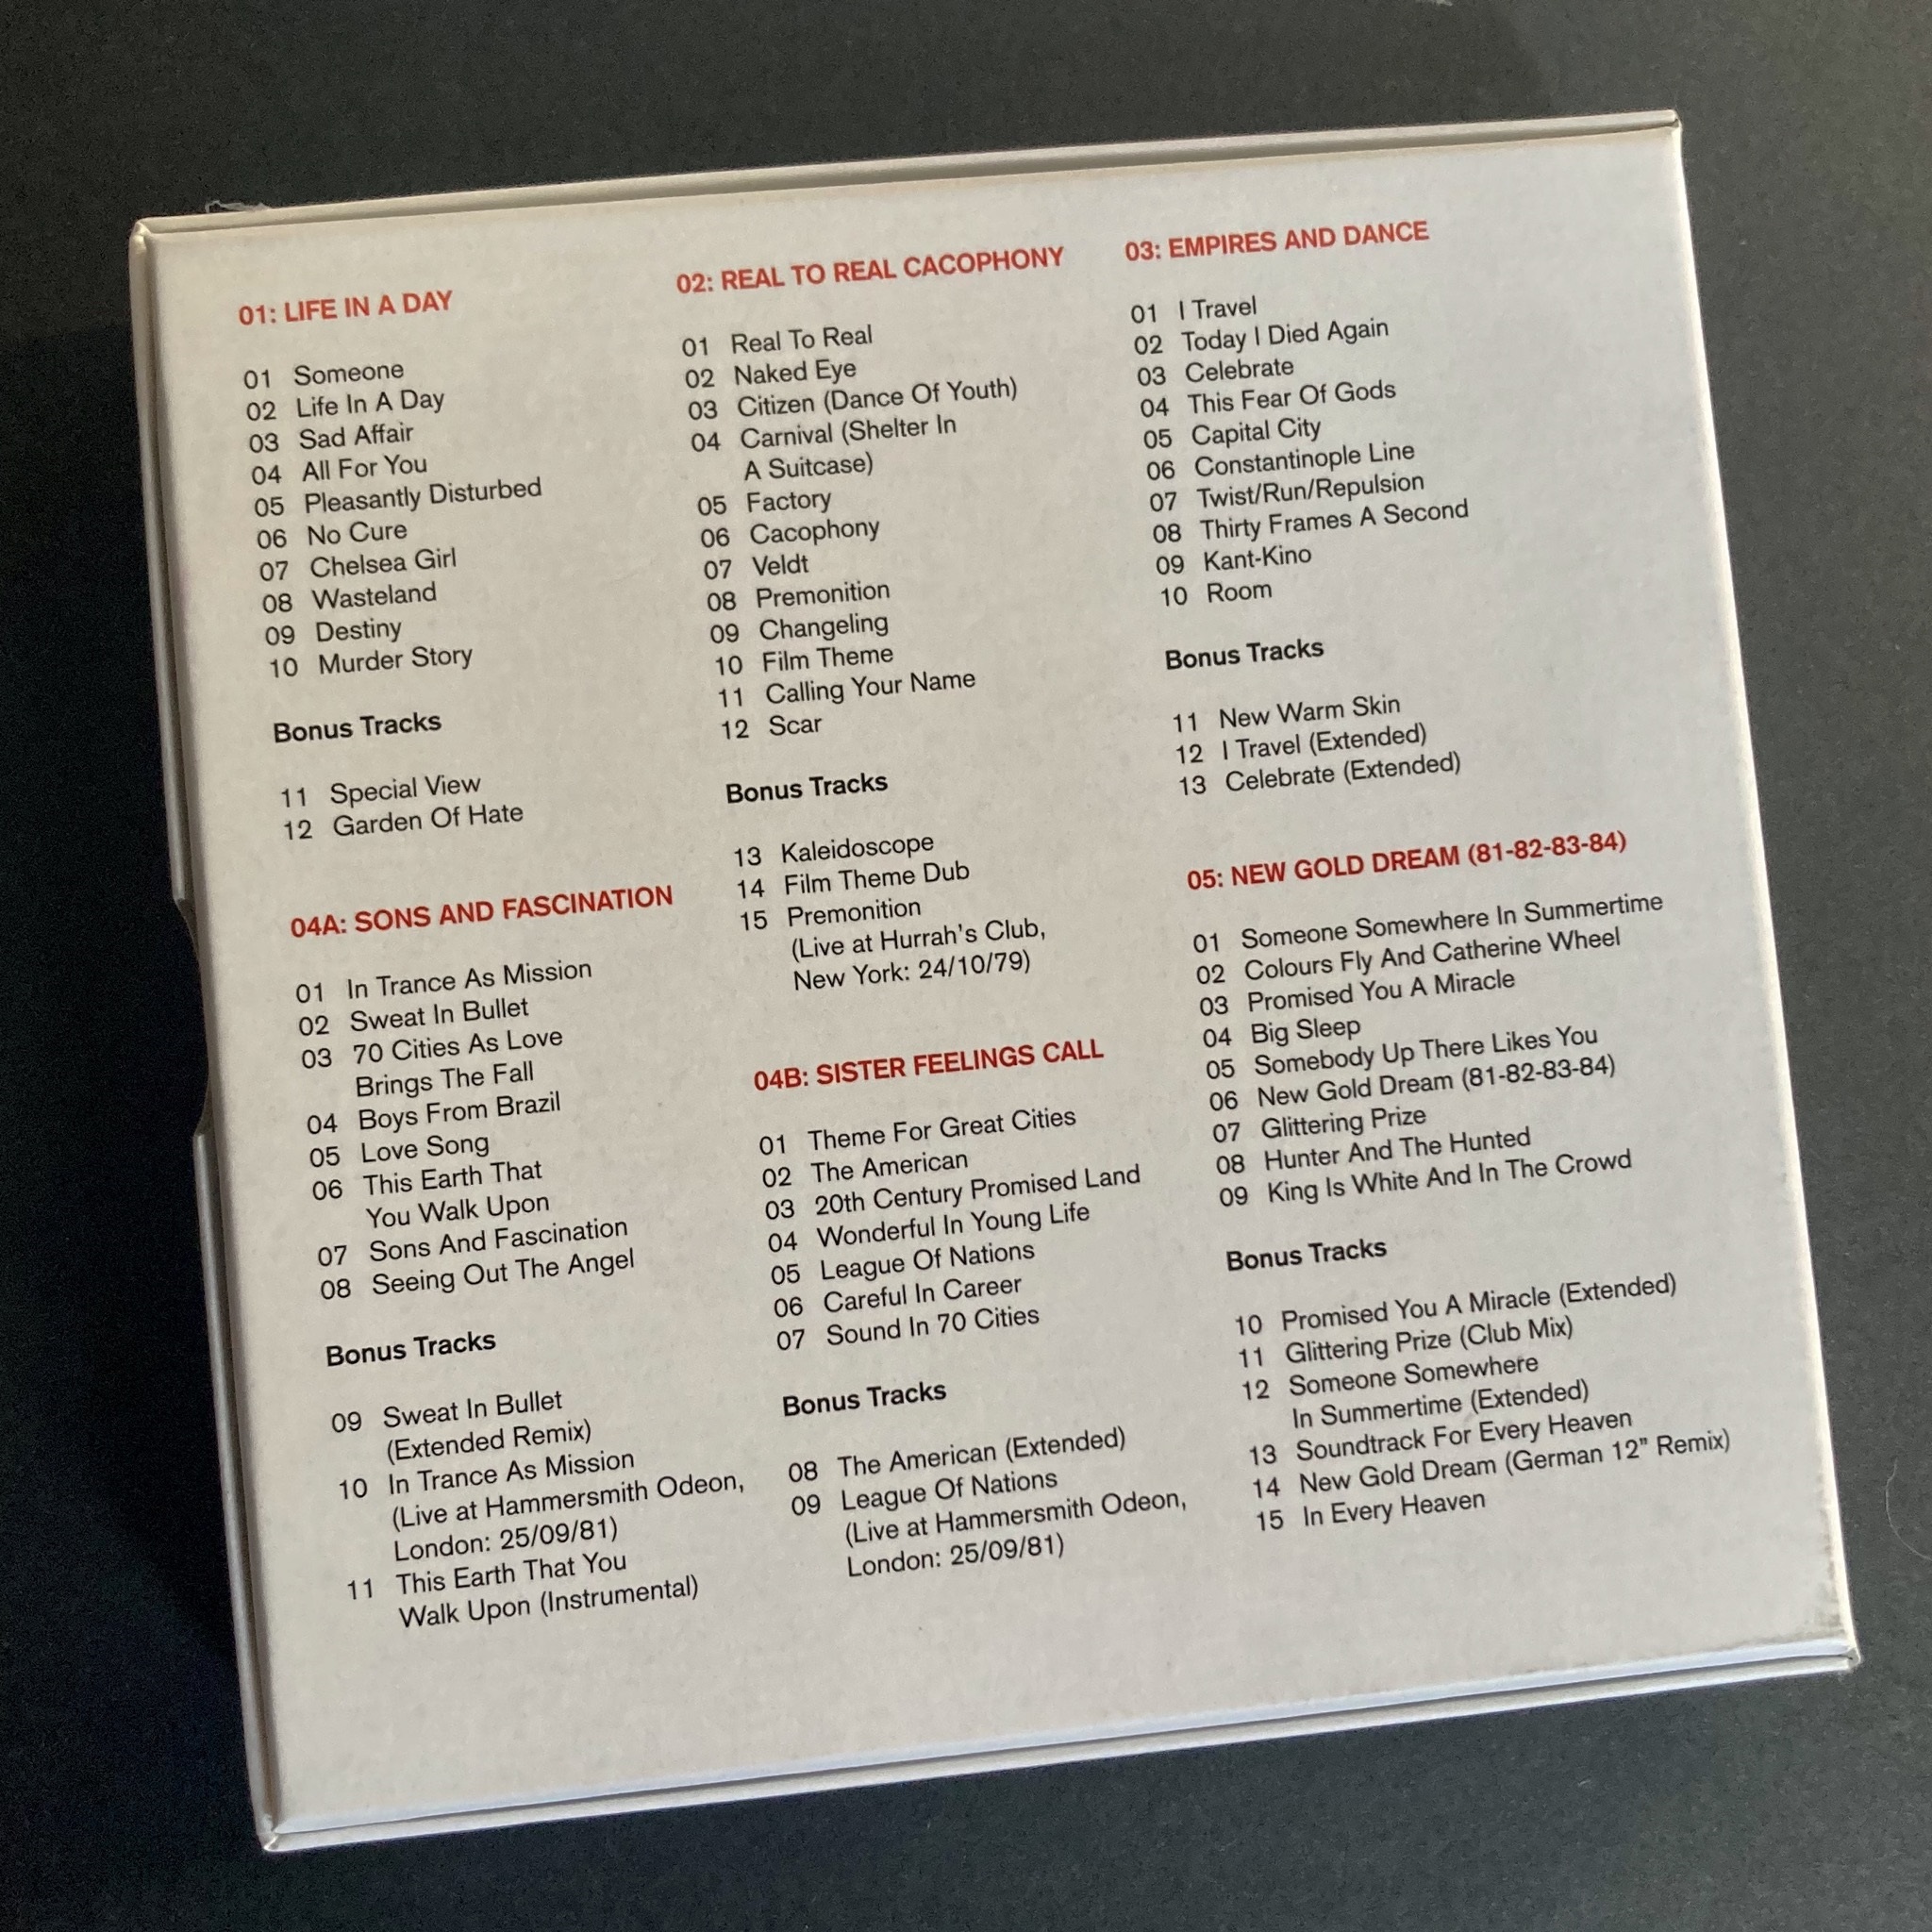 Simple Minds 'X5' CD Box Set edition - box rear